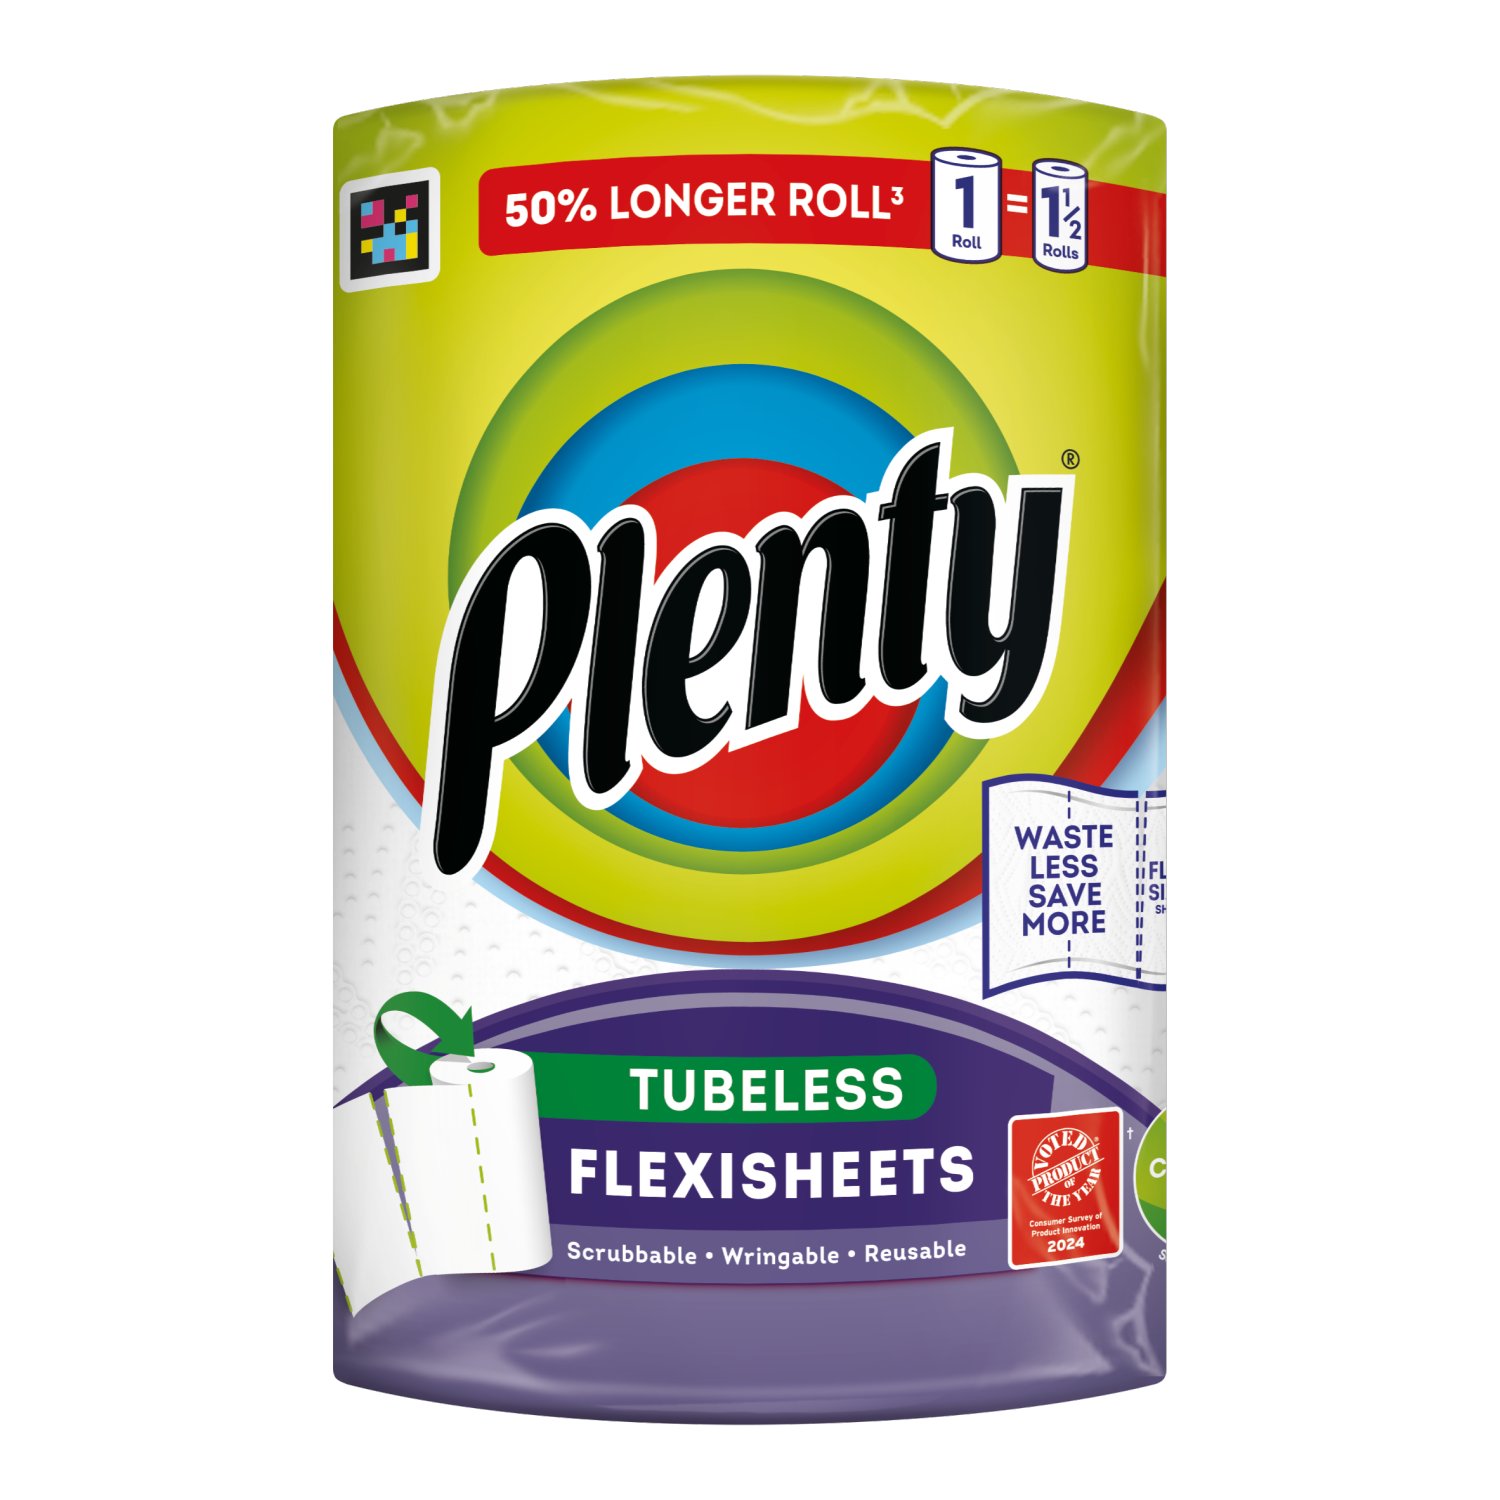 Plenty Flexi-sized sheets 50% Longer Tubeless Kitchen Towel 1 Roll (82 Piece)